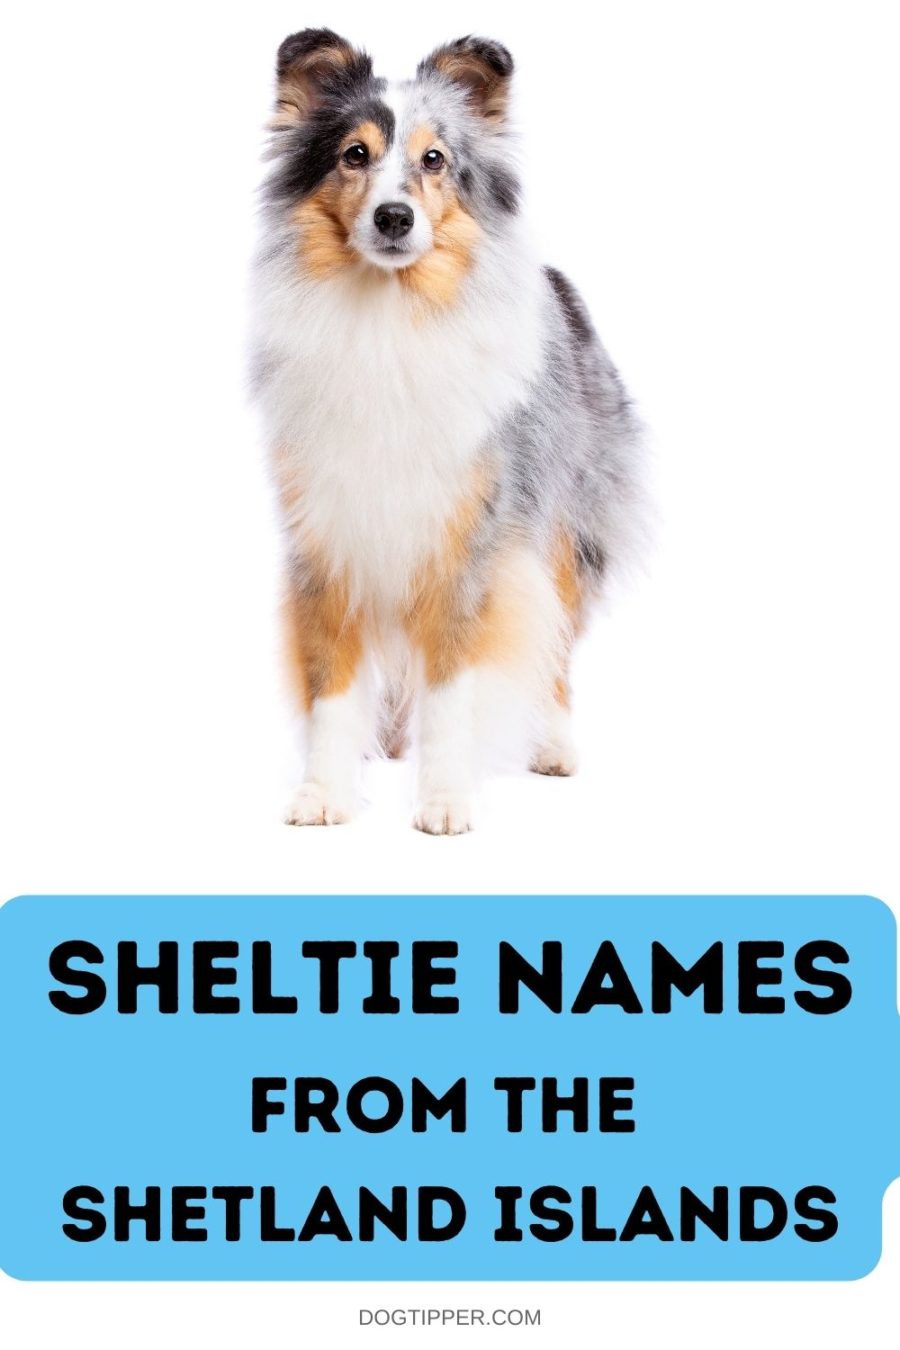 Sheltie Names from the Shetland Islands